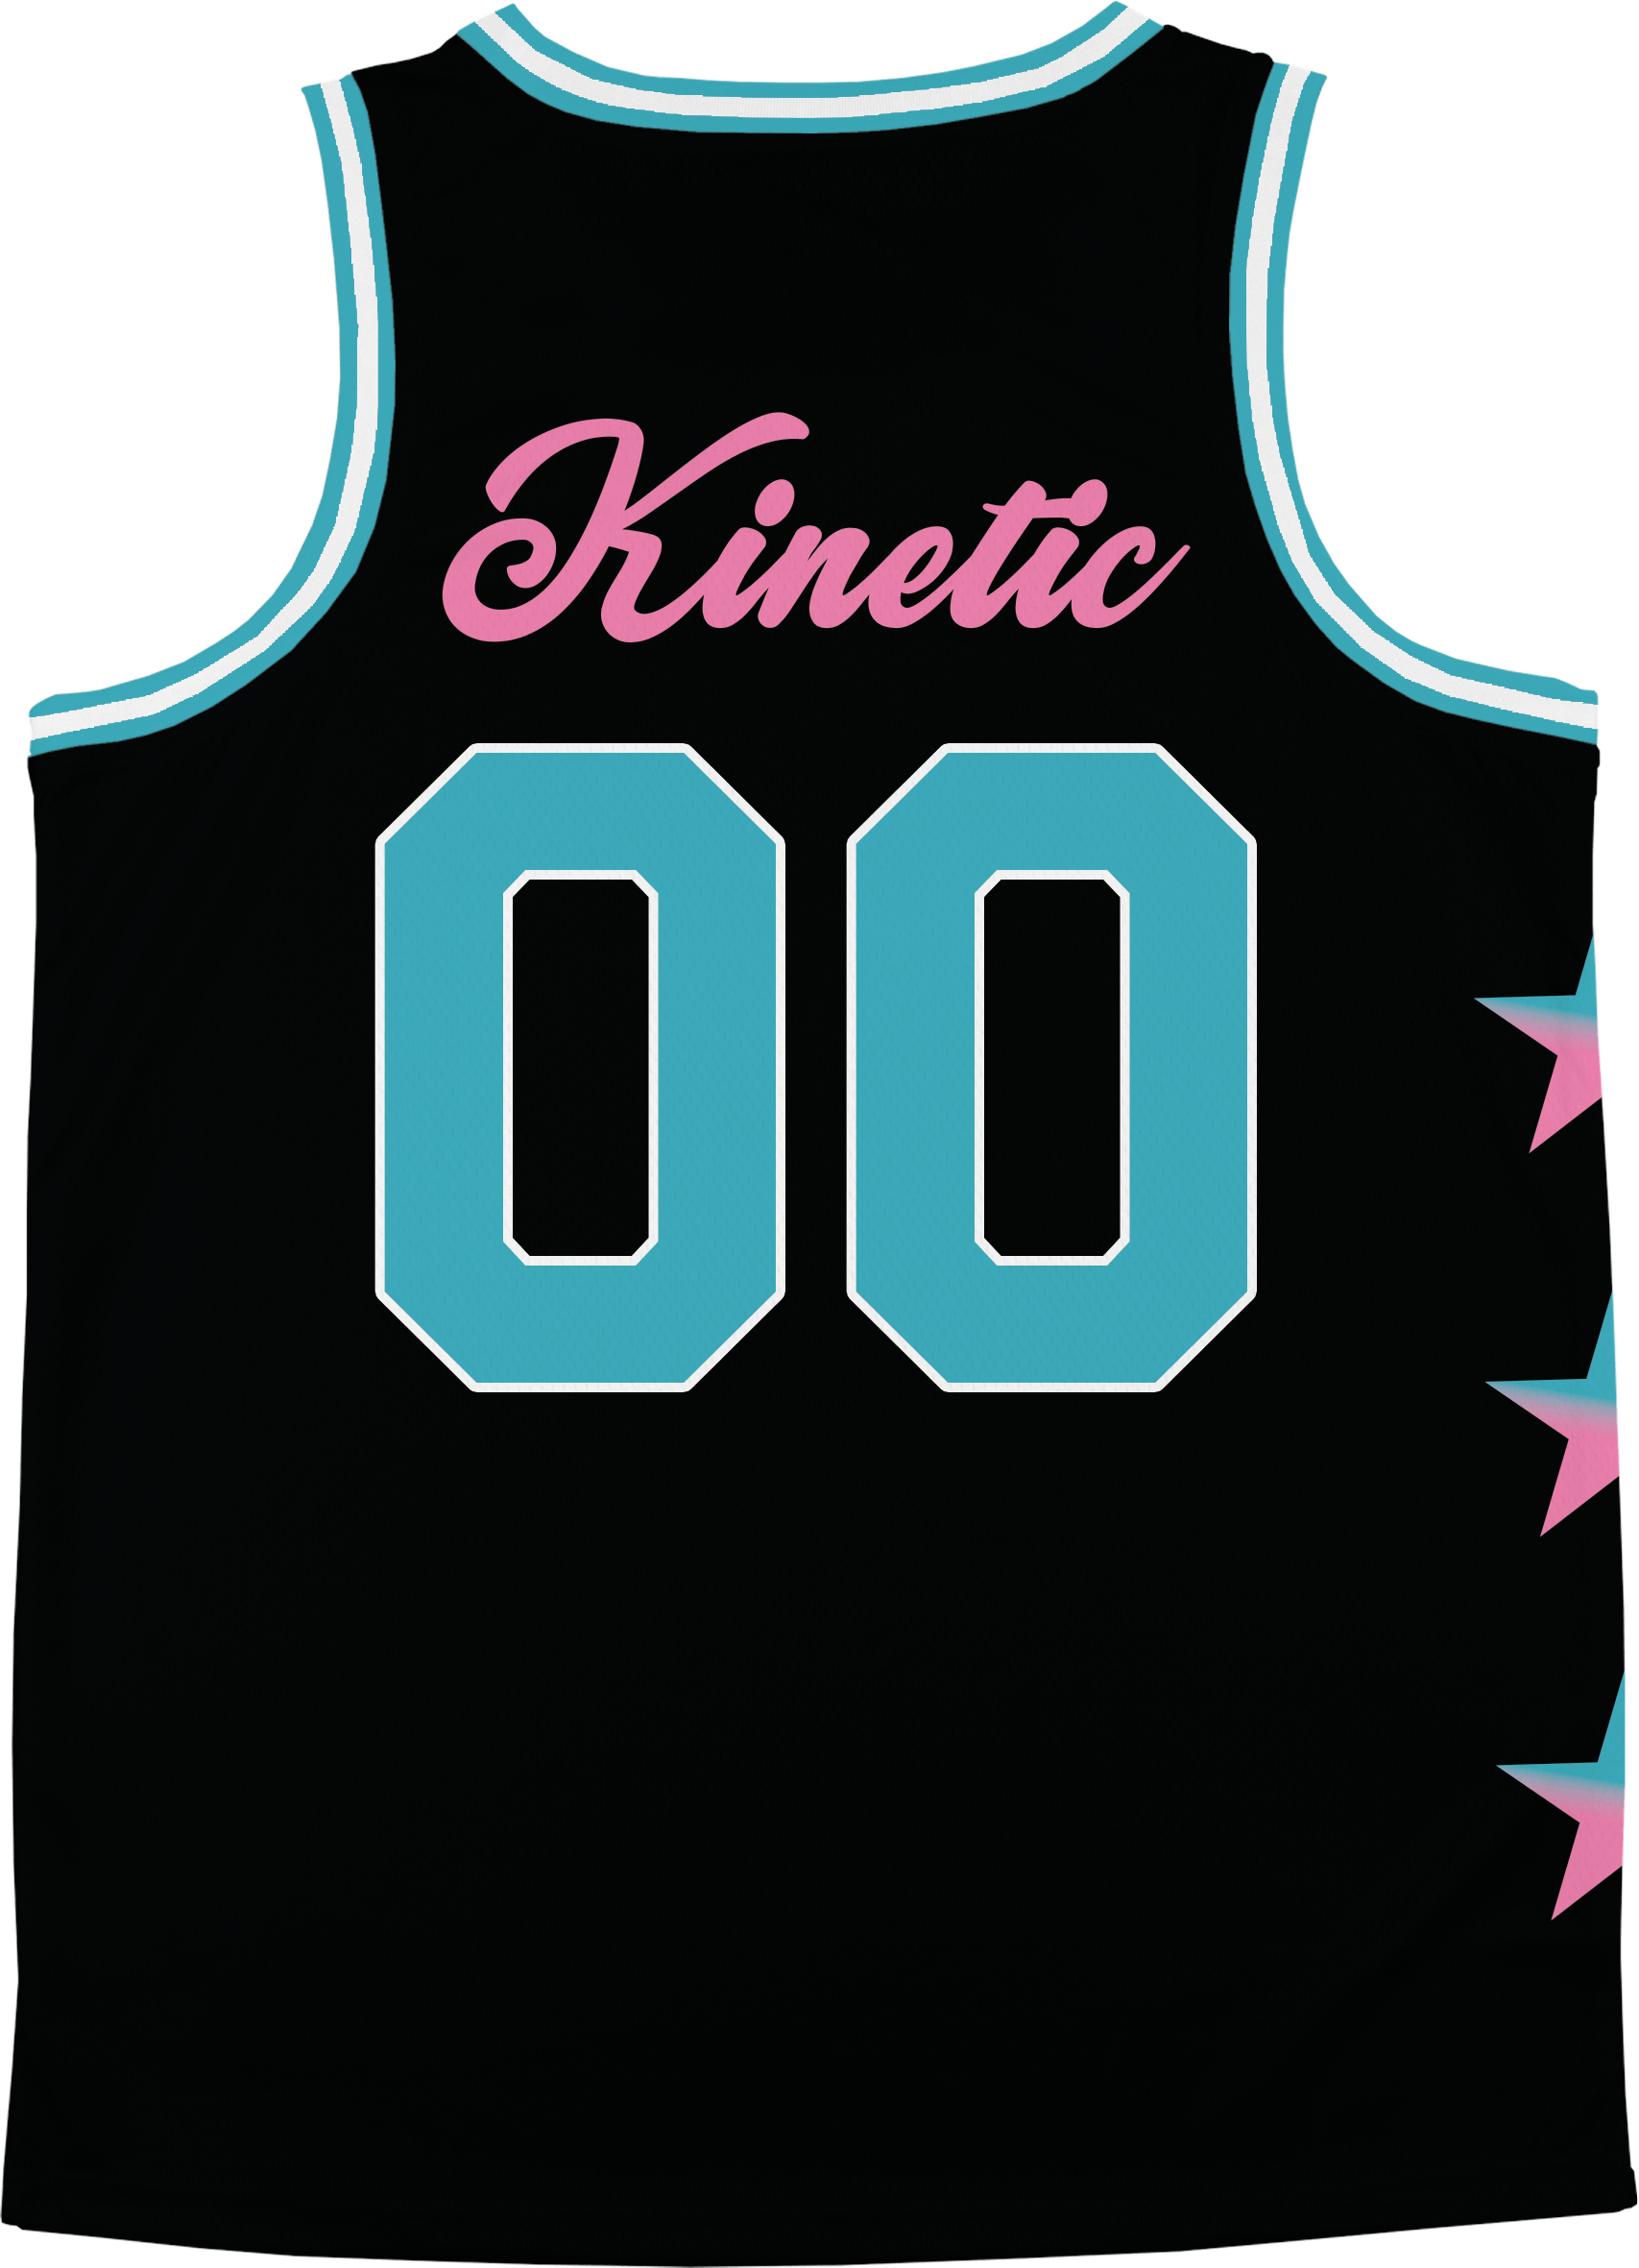 Phi Kappa Tau - Cotton Candy Basketball Jersey - Kinetic Society